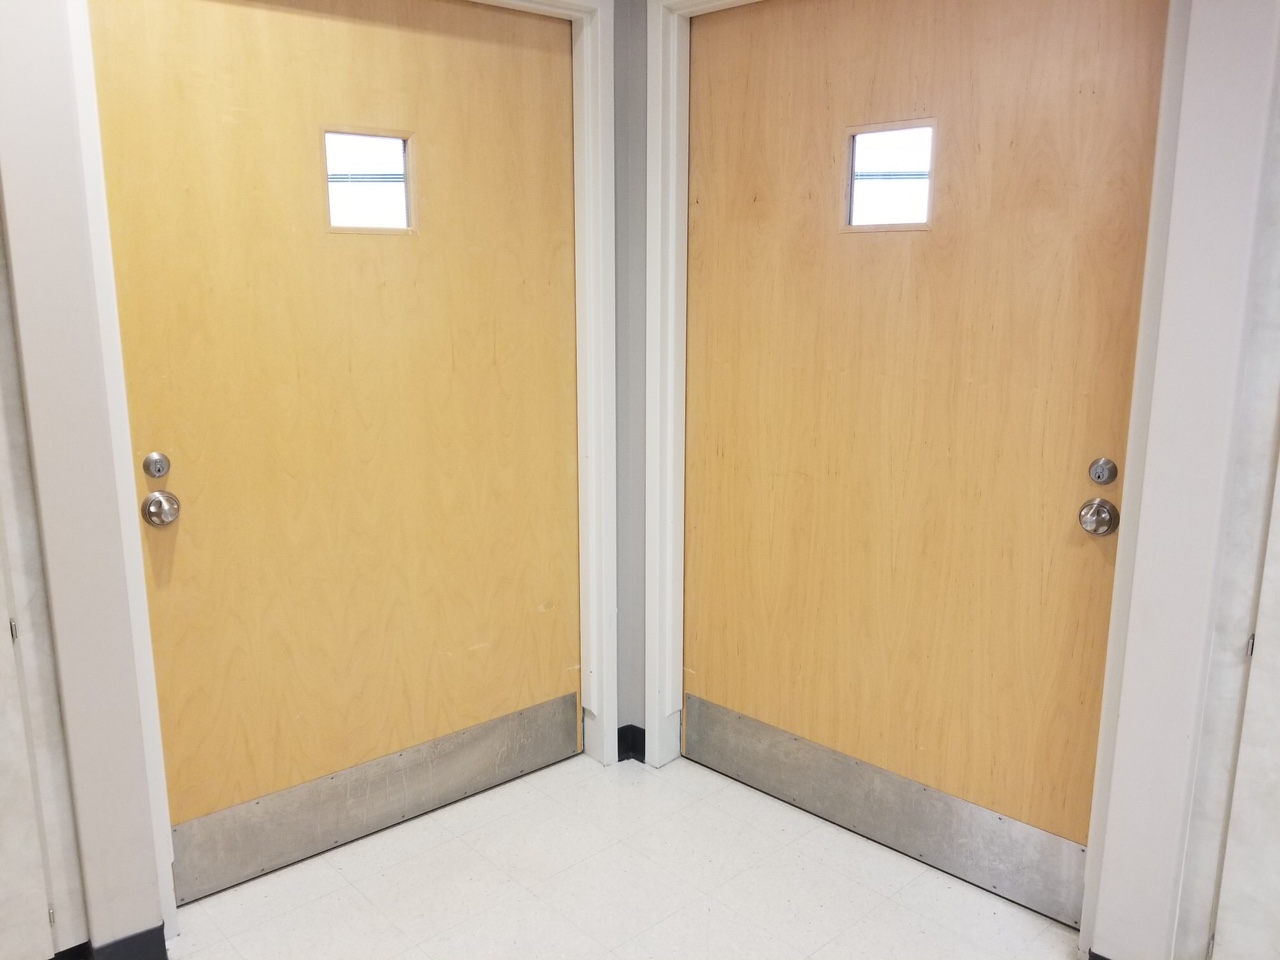 Ligature resistant hardware on hospital door